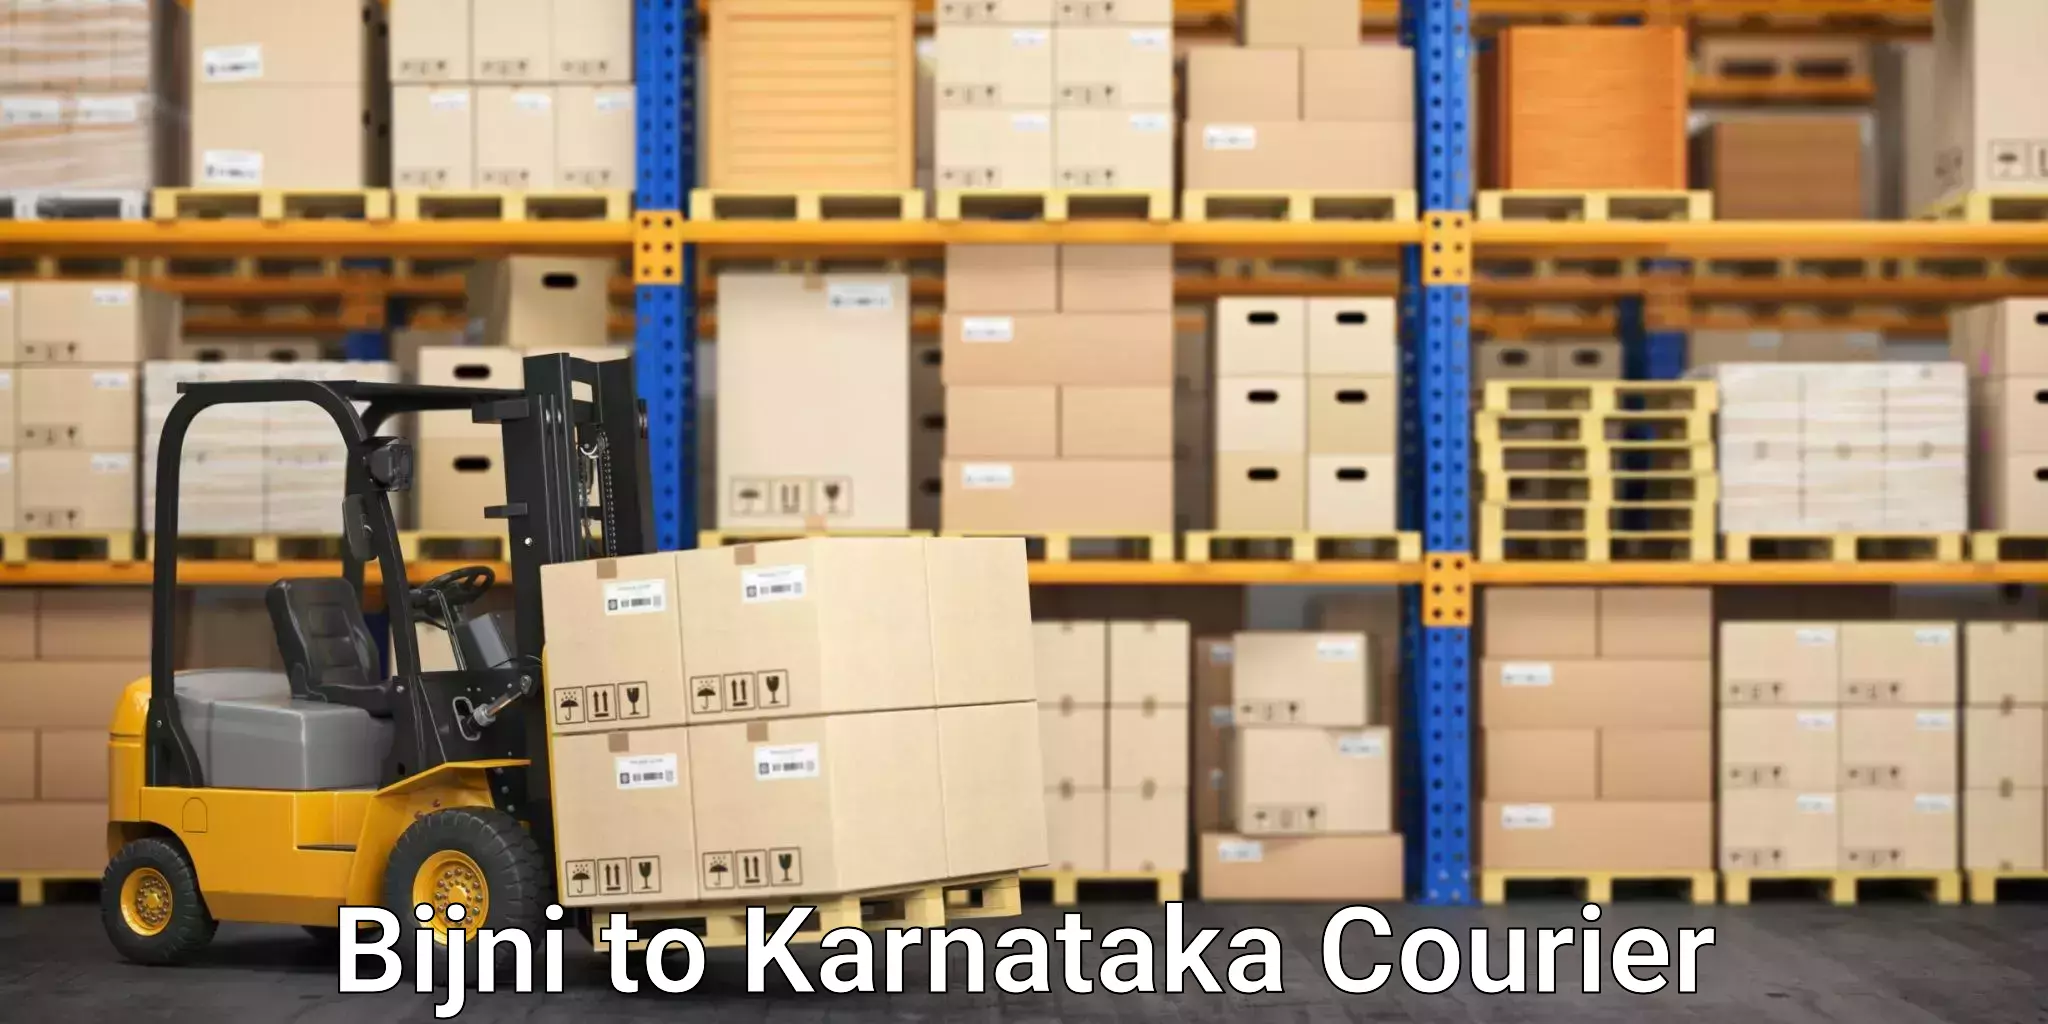 Express courier capabilities in Bijni to Karnataka